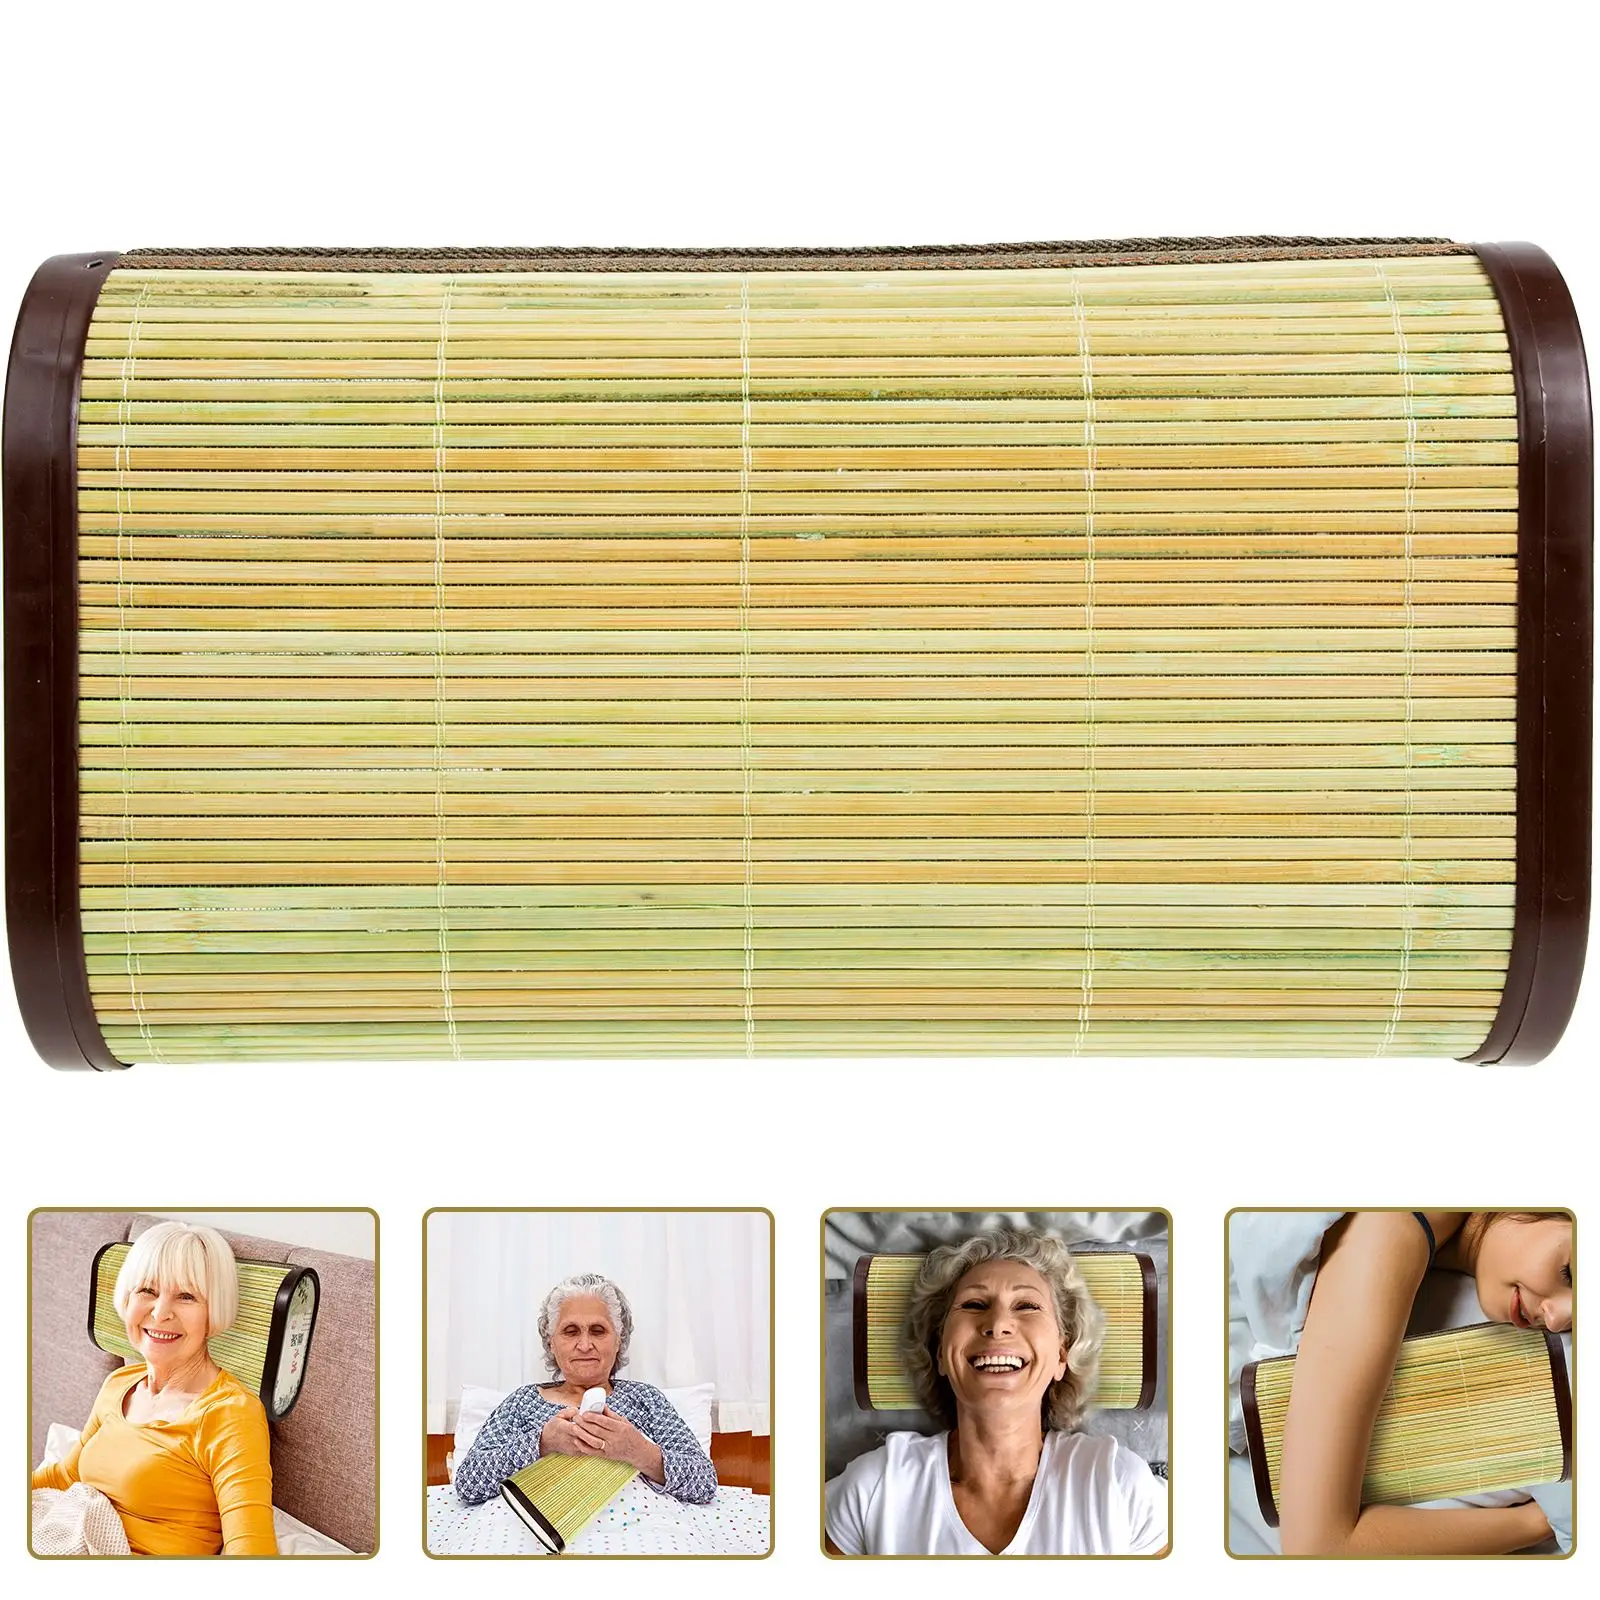 

Neck Rest Sweat Steam Neck Cushion Supply Bamboo Pillow Woven Pillows Elderly Sweat Stem Home Supplies Cooling Take Bath